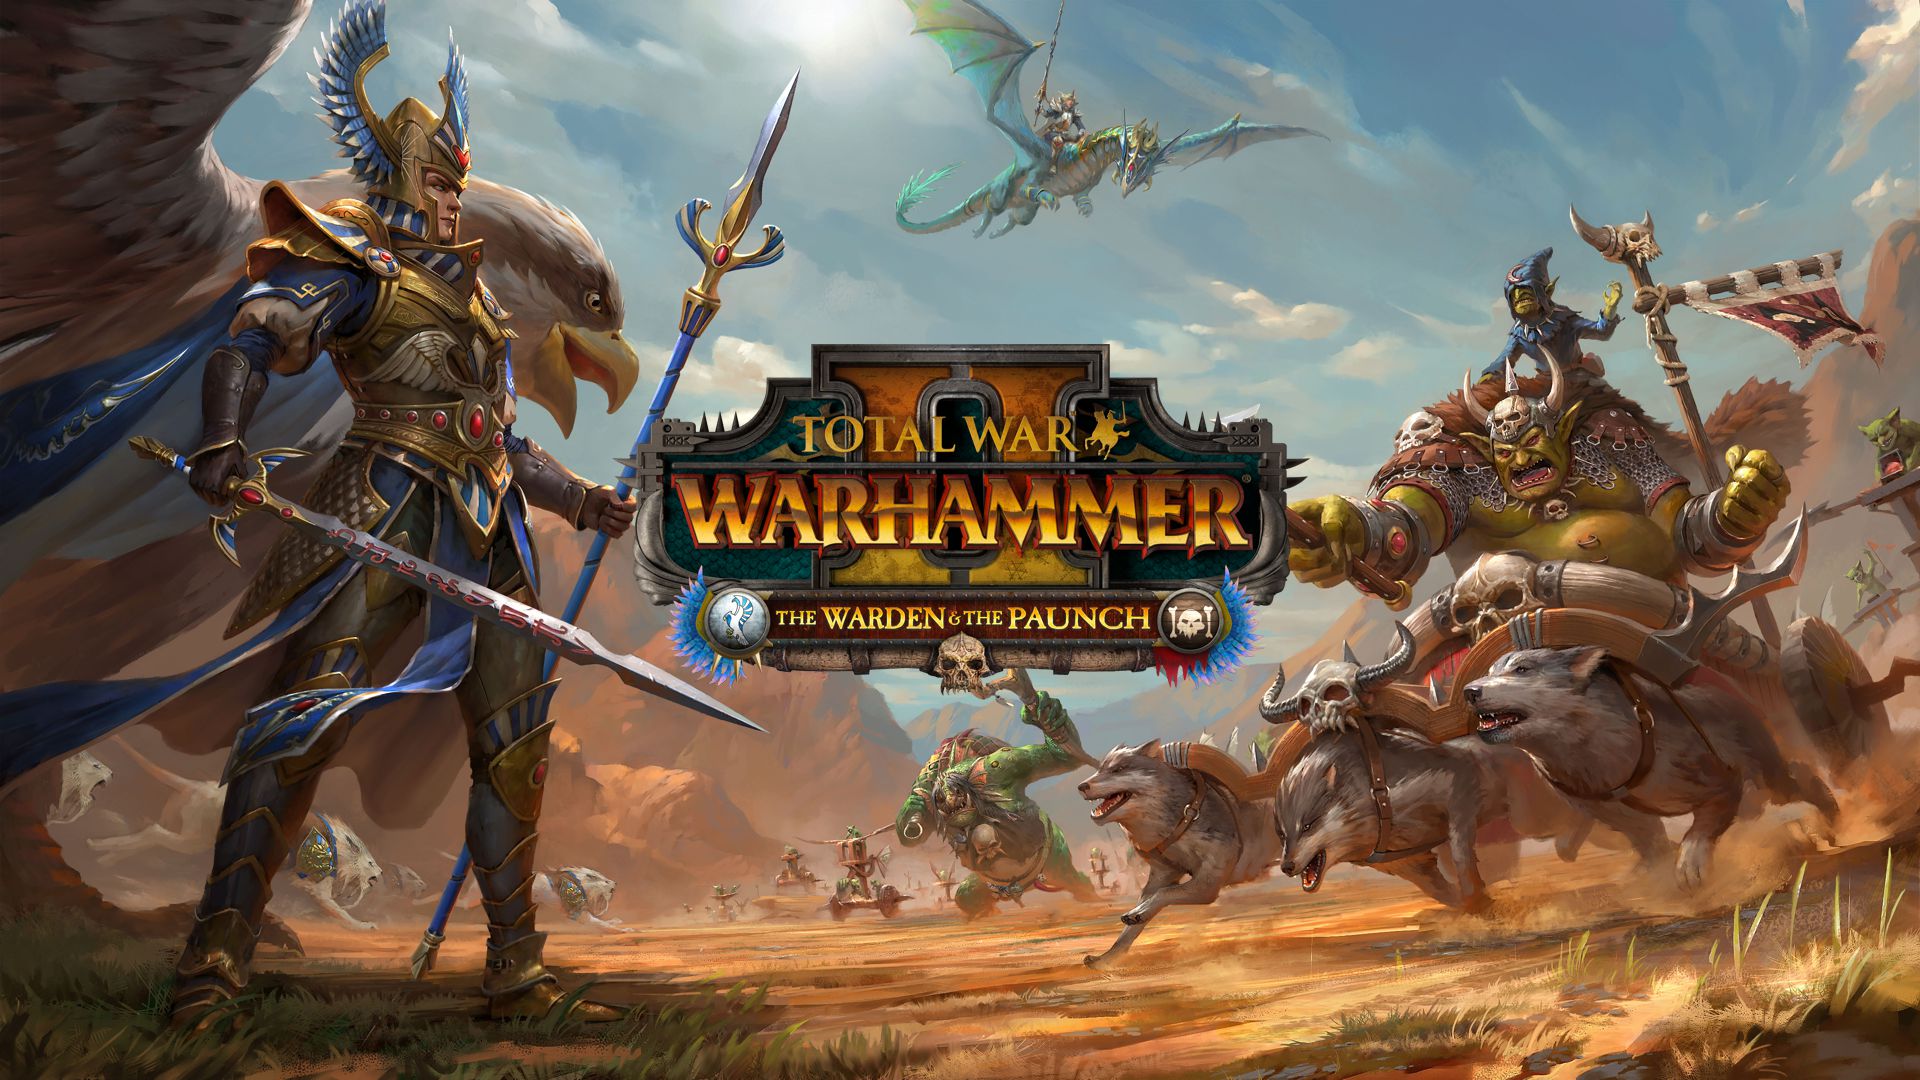 Total war: warhammer ii - the warden & the paunch